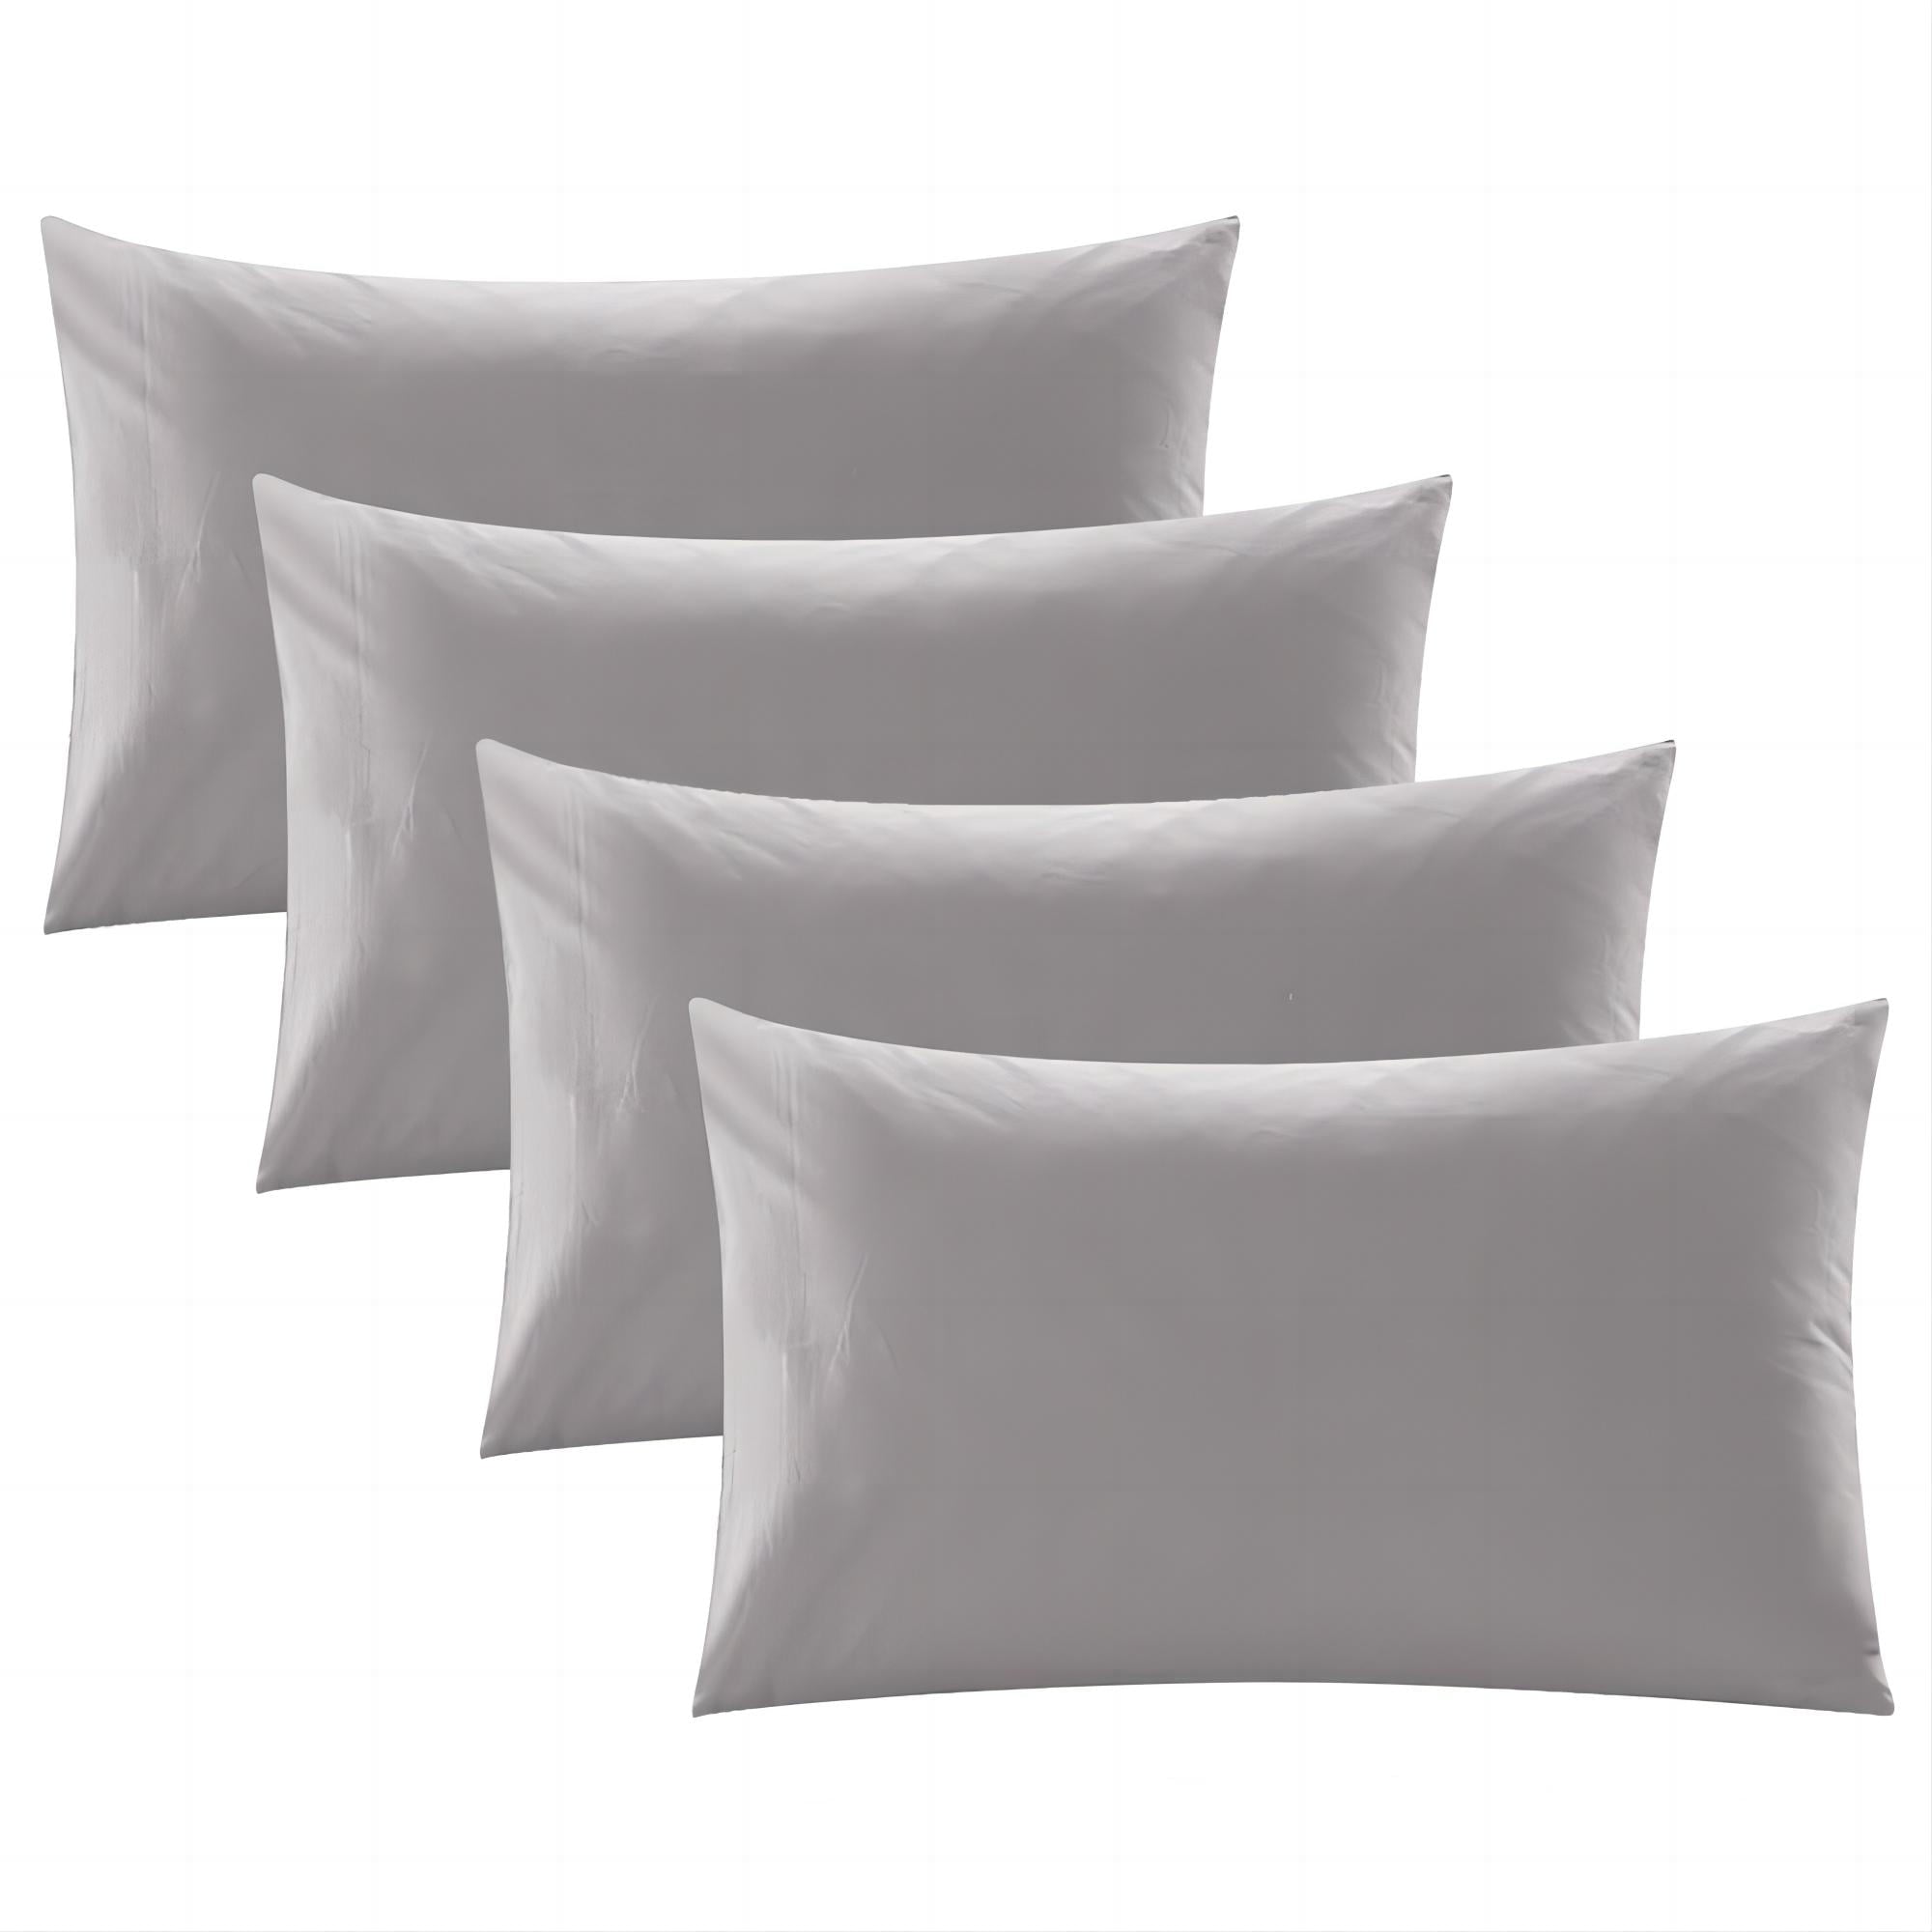 ANMINY Pillowcase set of 4 Pillow Cases-7